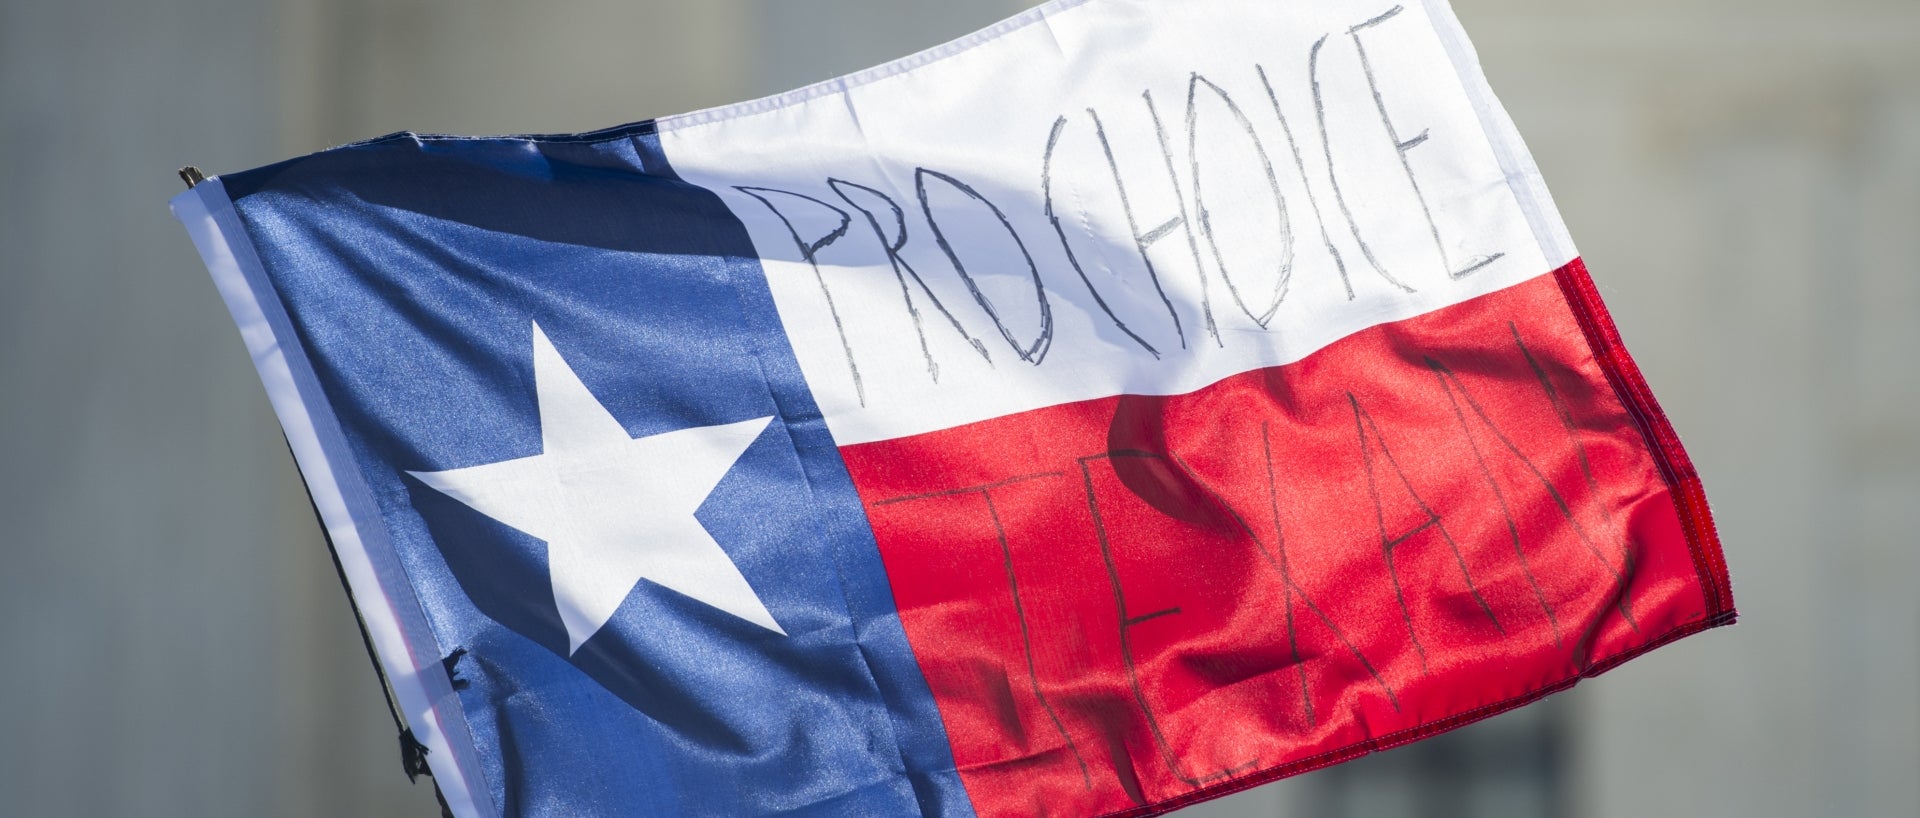 Pro-choice written on Texas flag